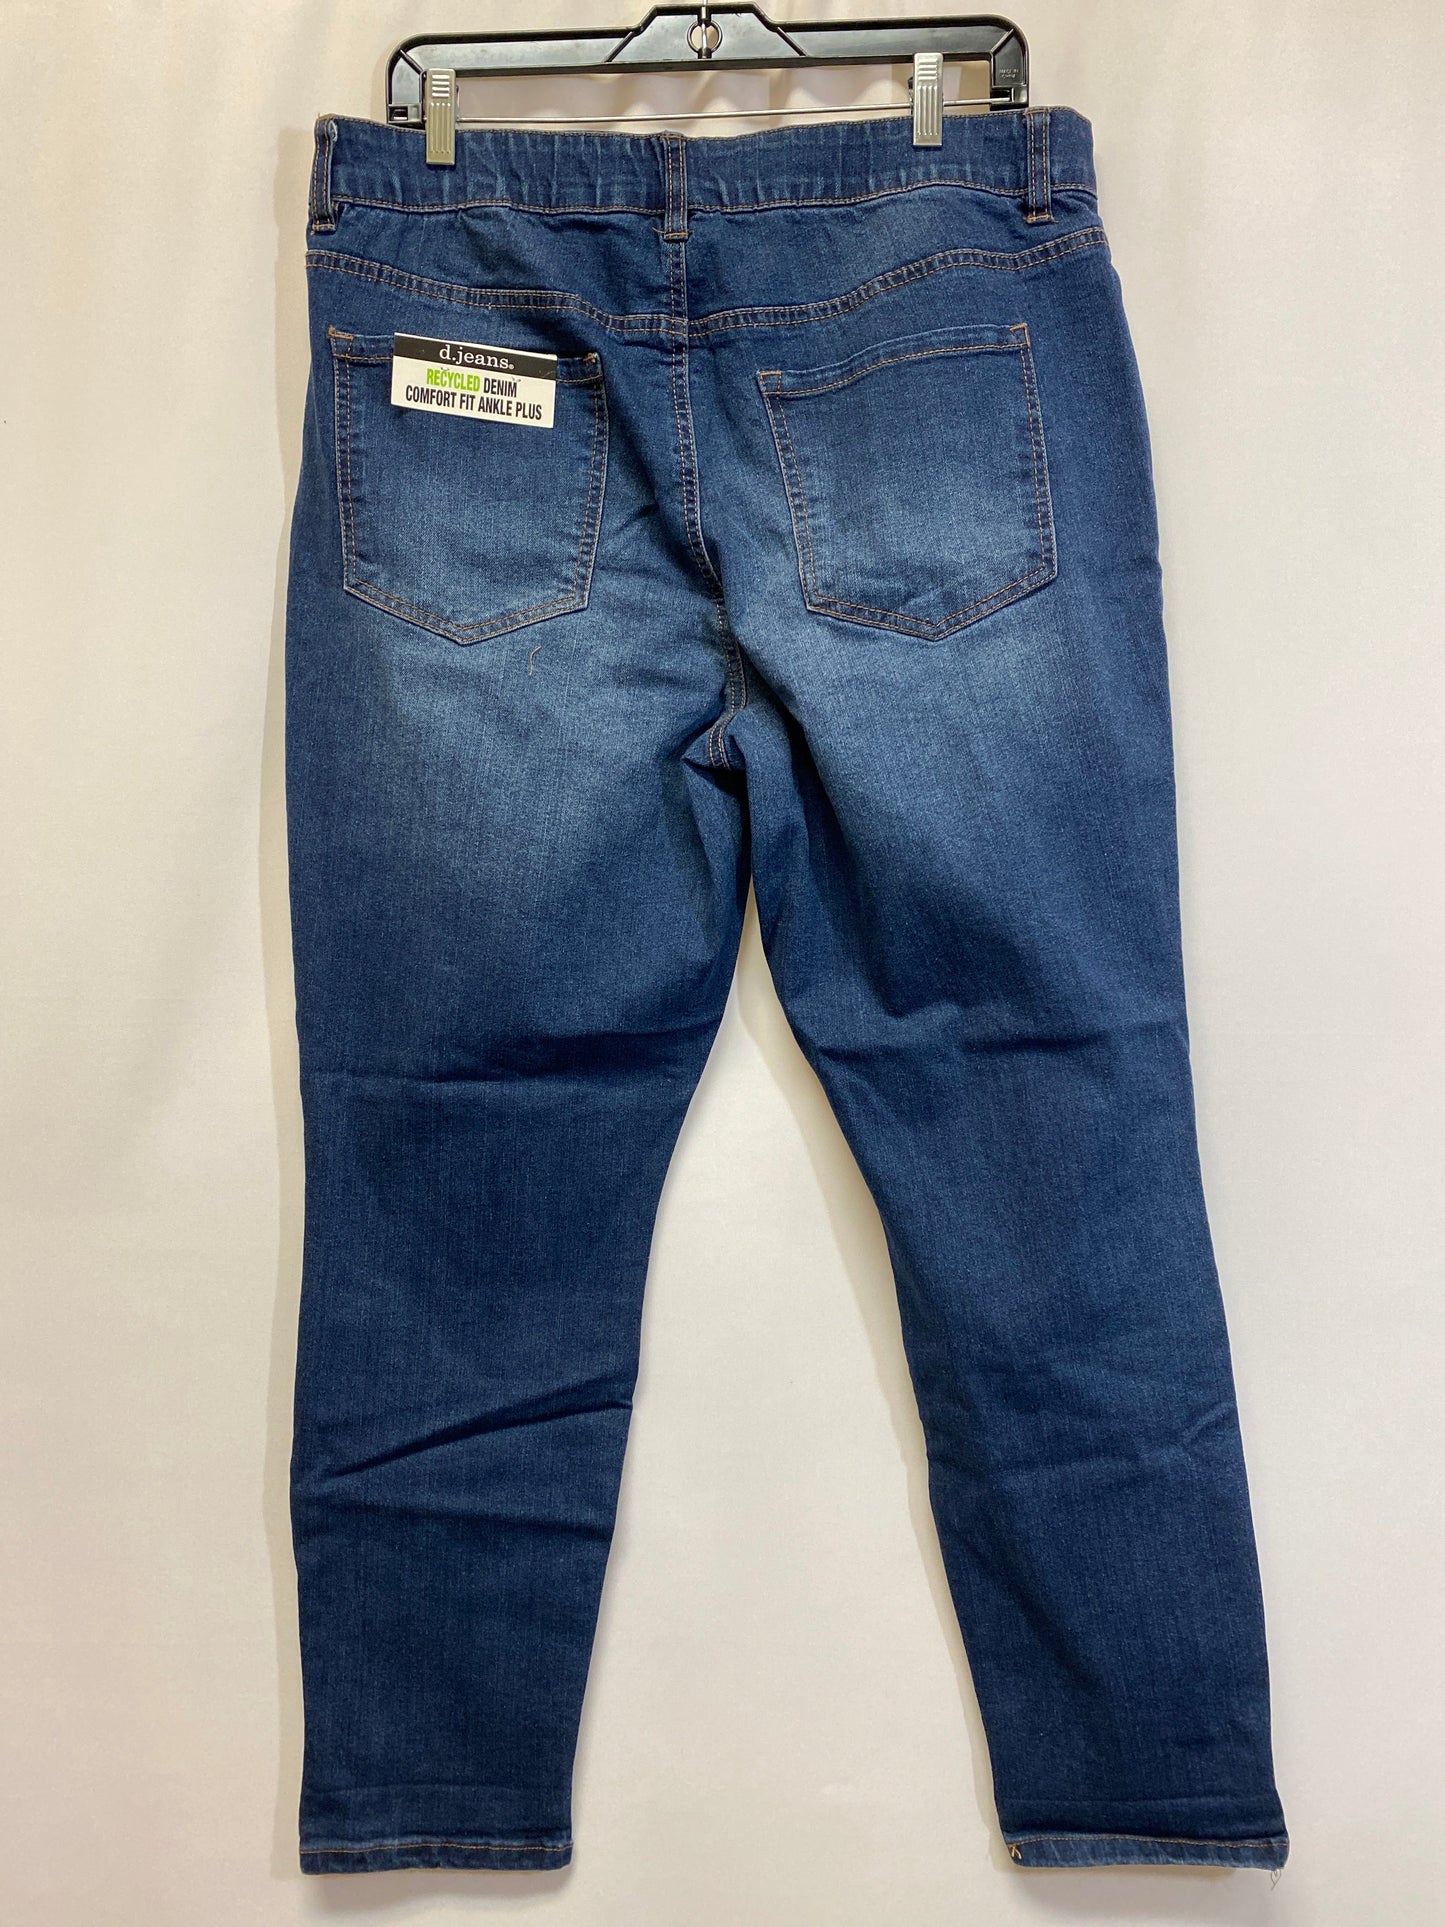 Blue Denim Jeans Straight D Jeans, Size 18w